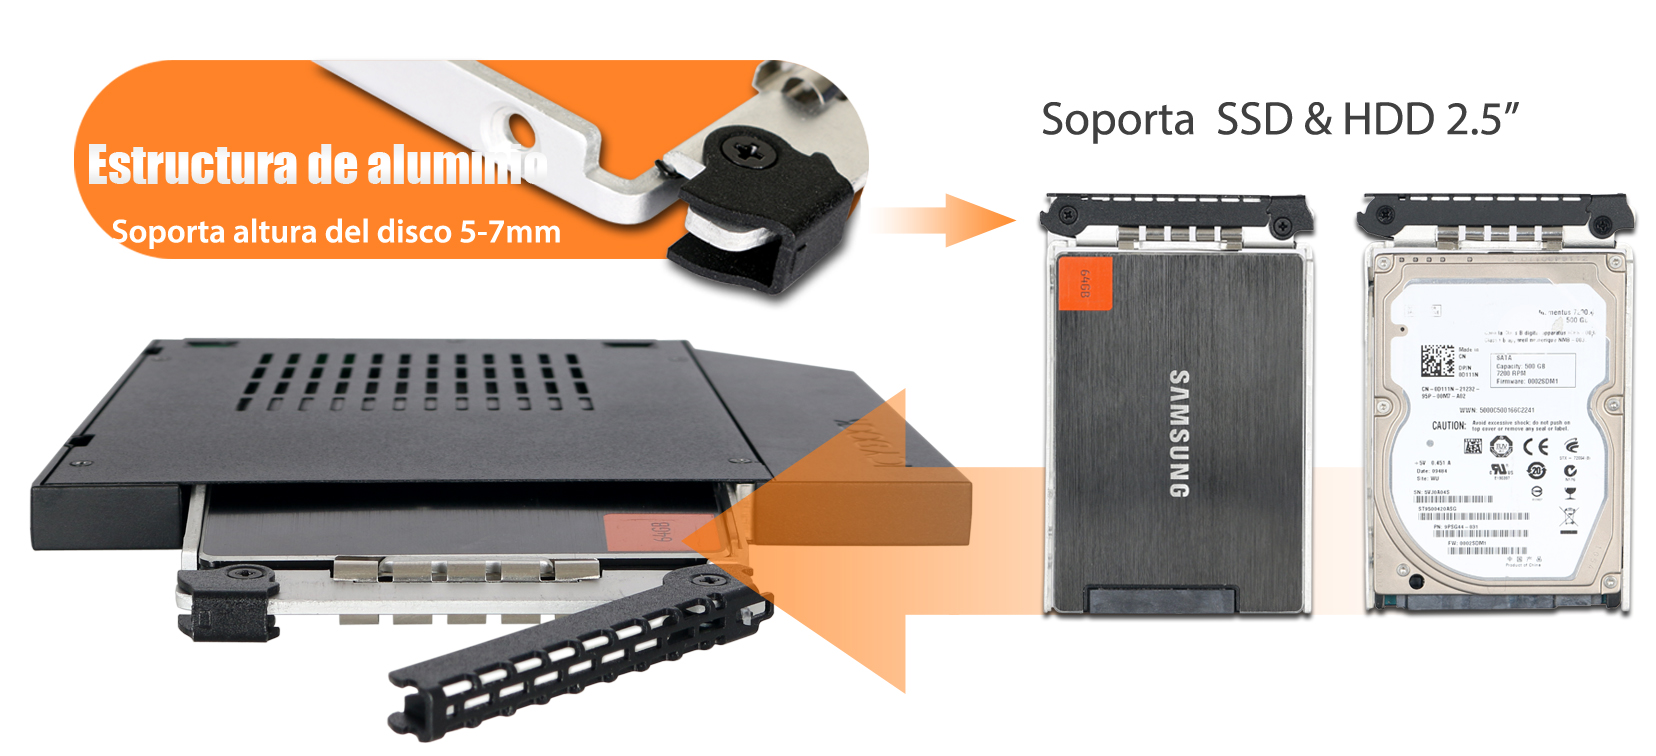 Foto de un SSD y un HDD de 2,5 a la derecha y foto del marco de aluminio MB411SPO-2B a la izquierda